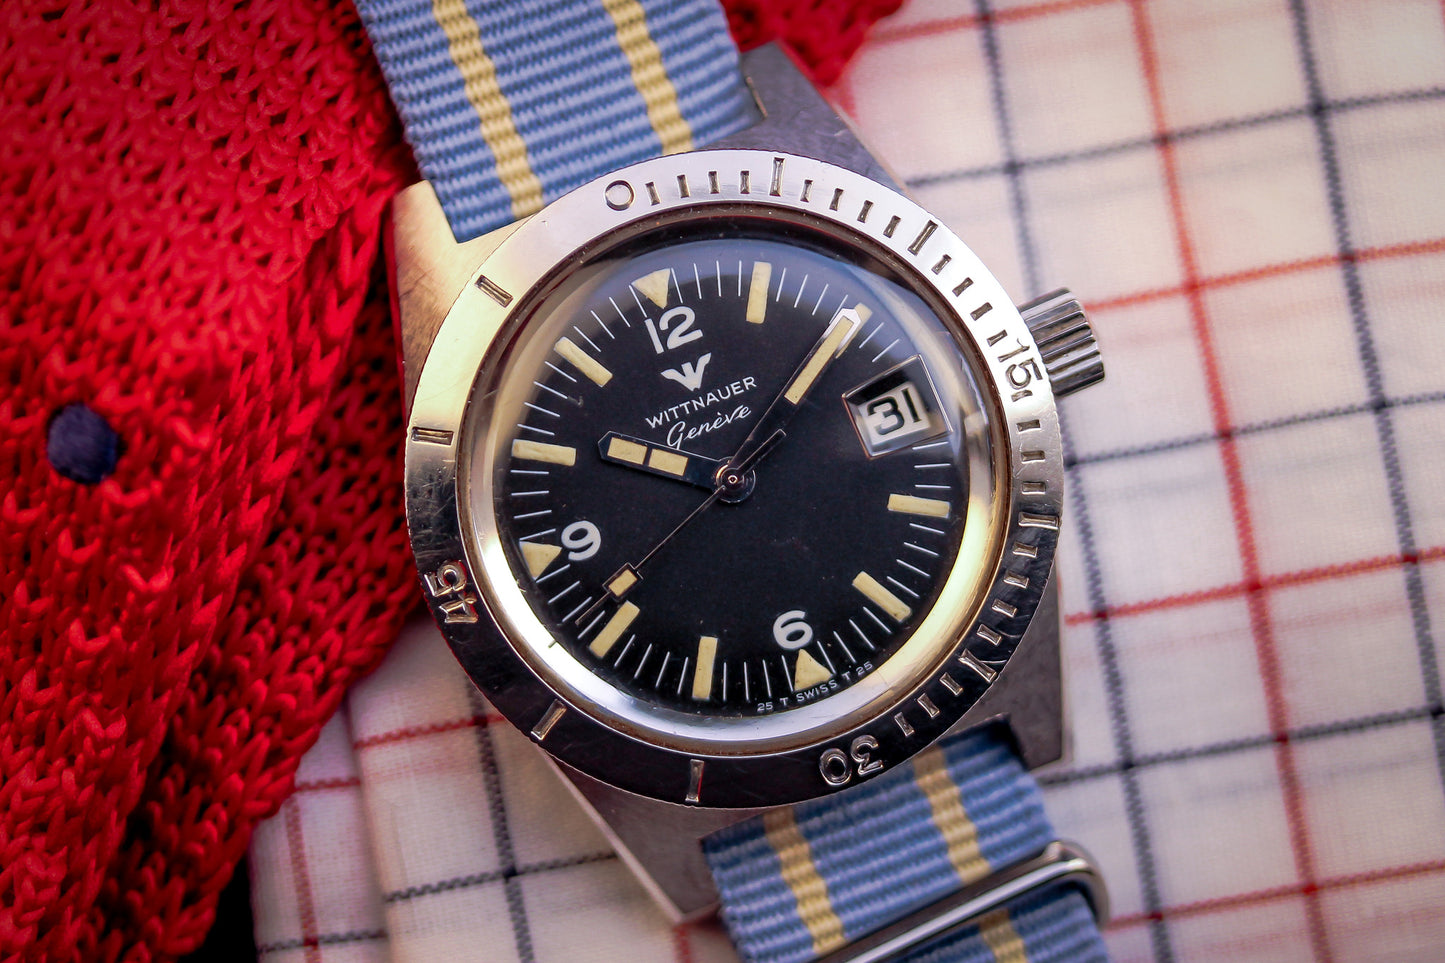 Wittnauer Steel Diver's Watch - 1960s